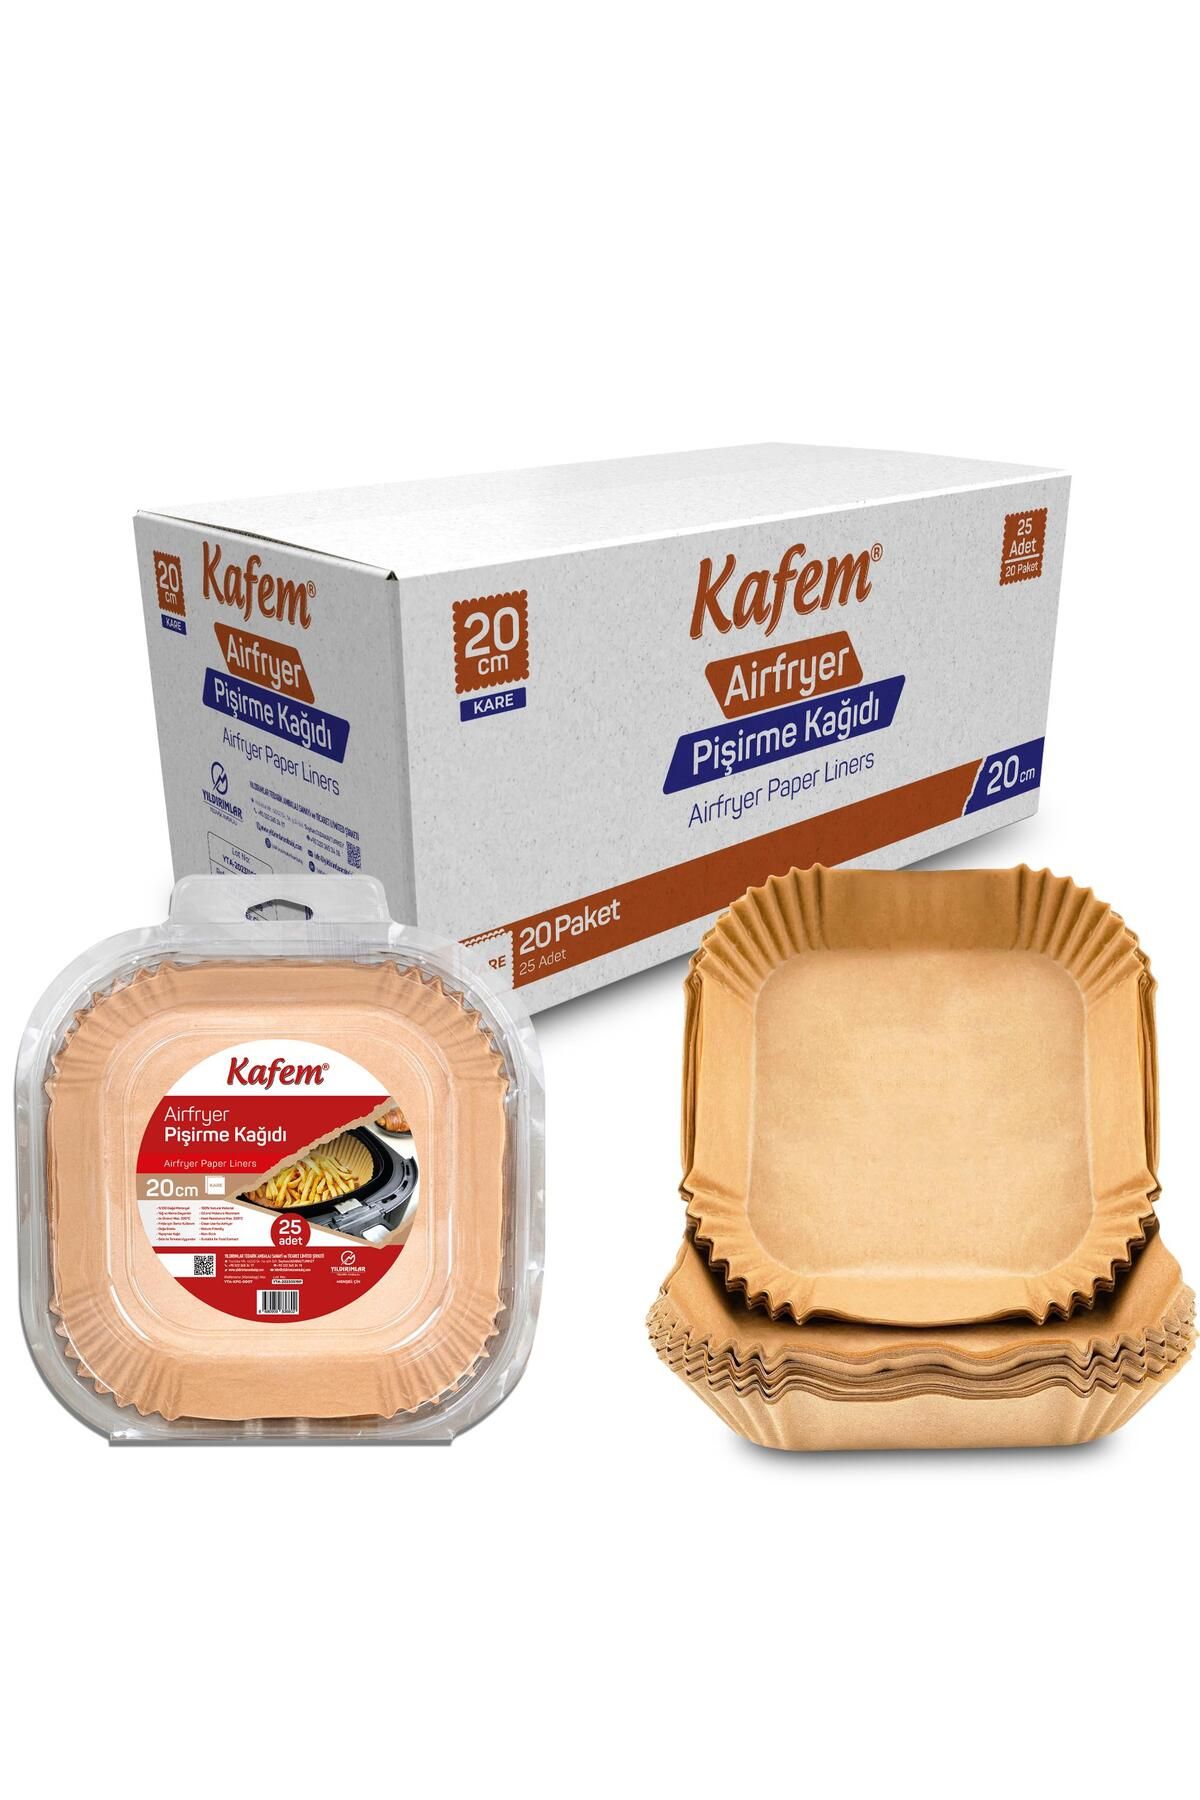 KAFEM Airfryer Pişirme Kağıdı Kare 20cm 25 li x 20 Paket (Koli)